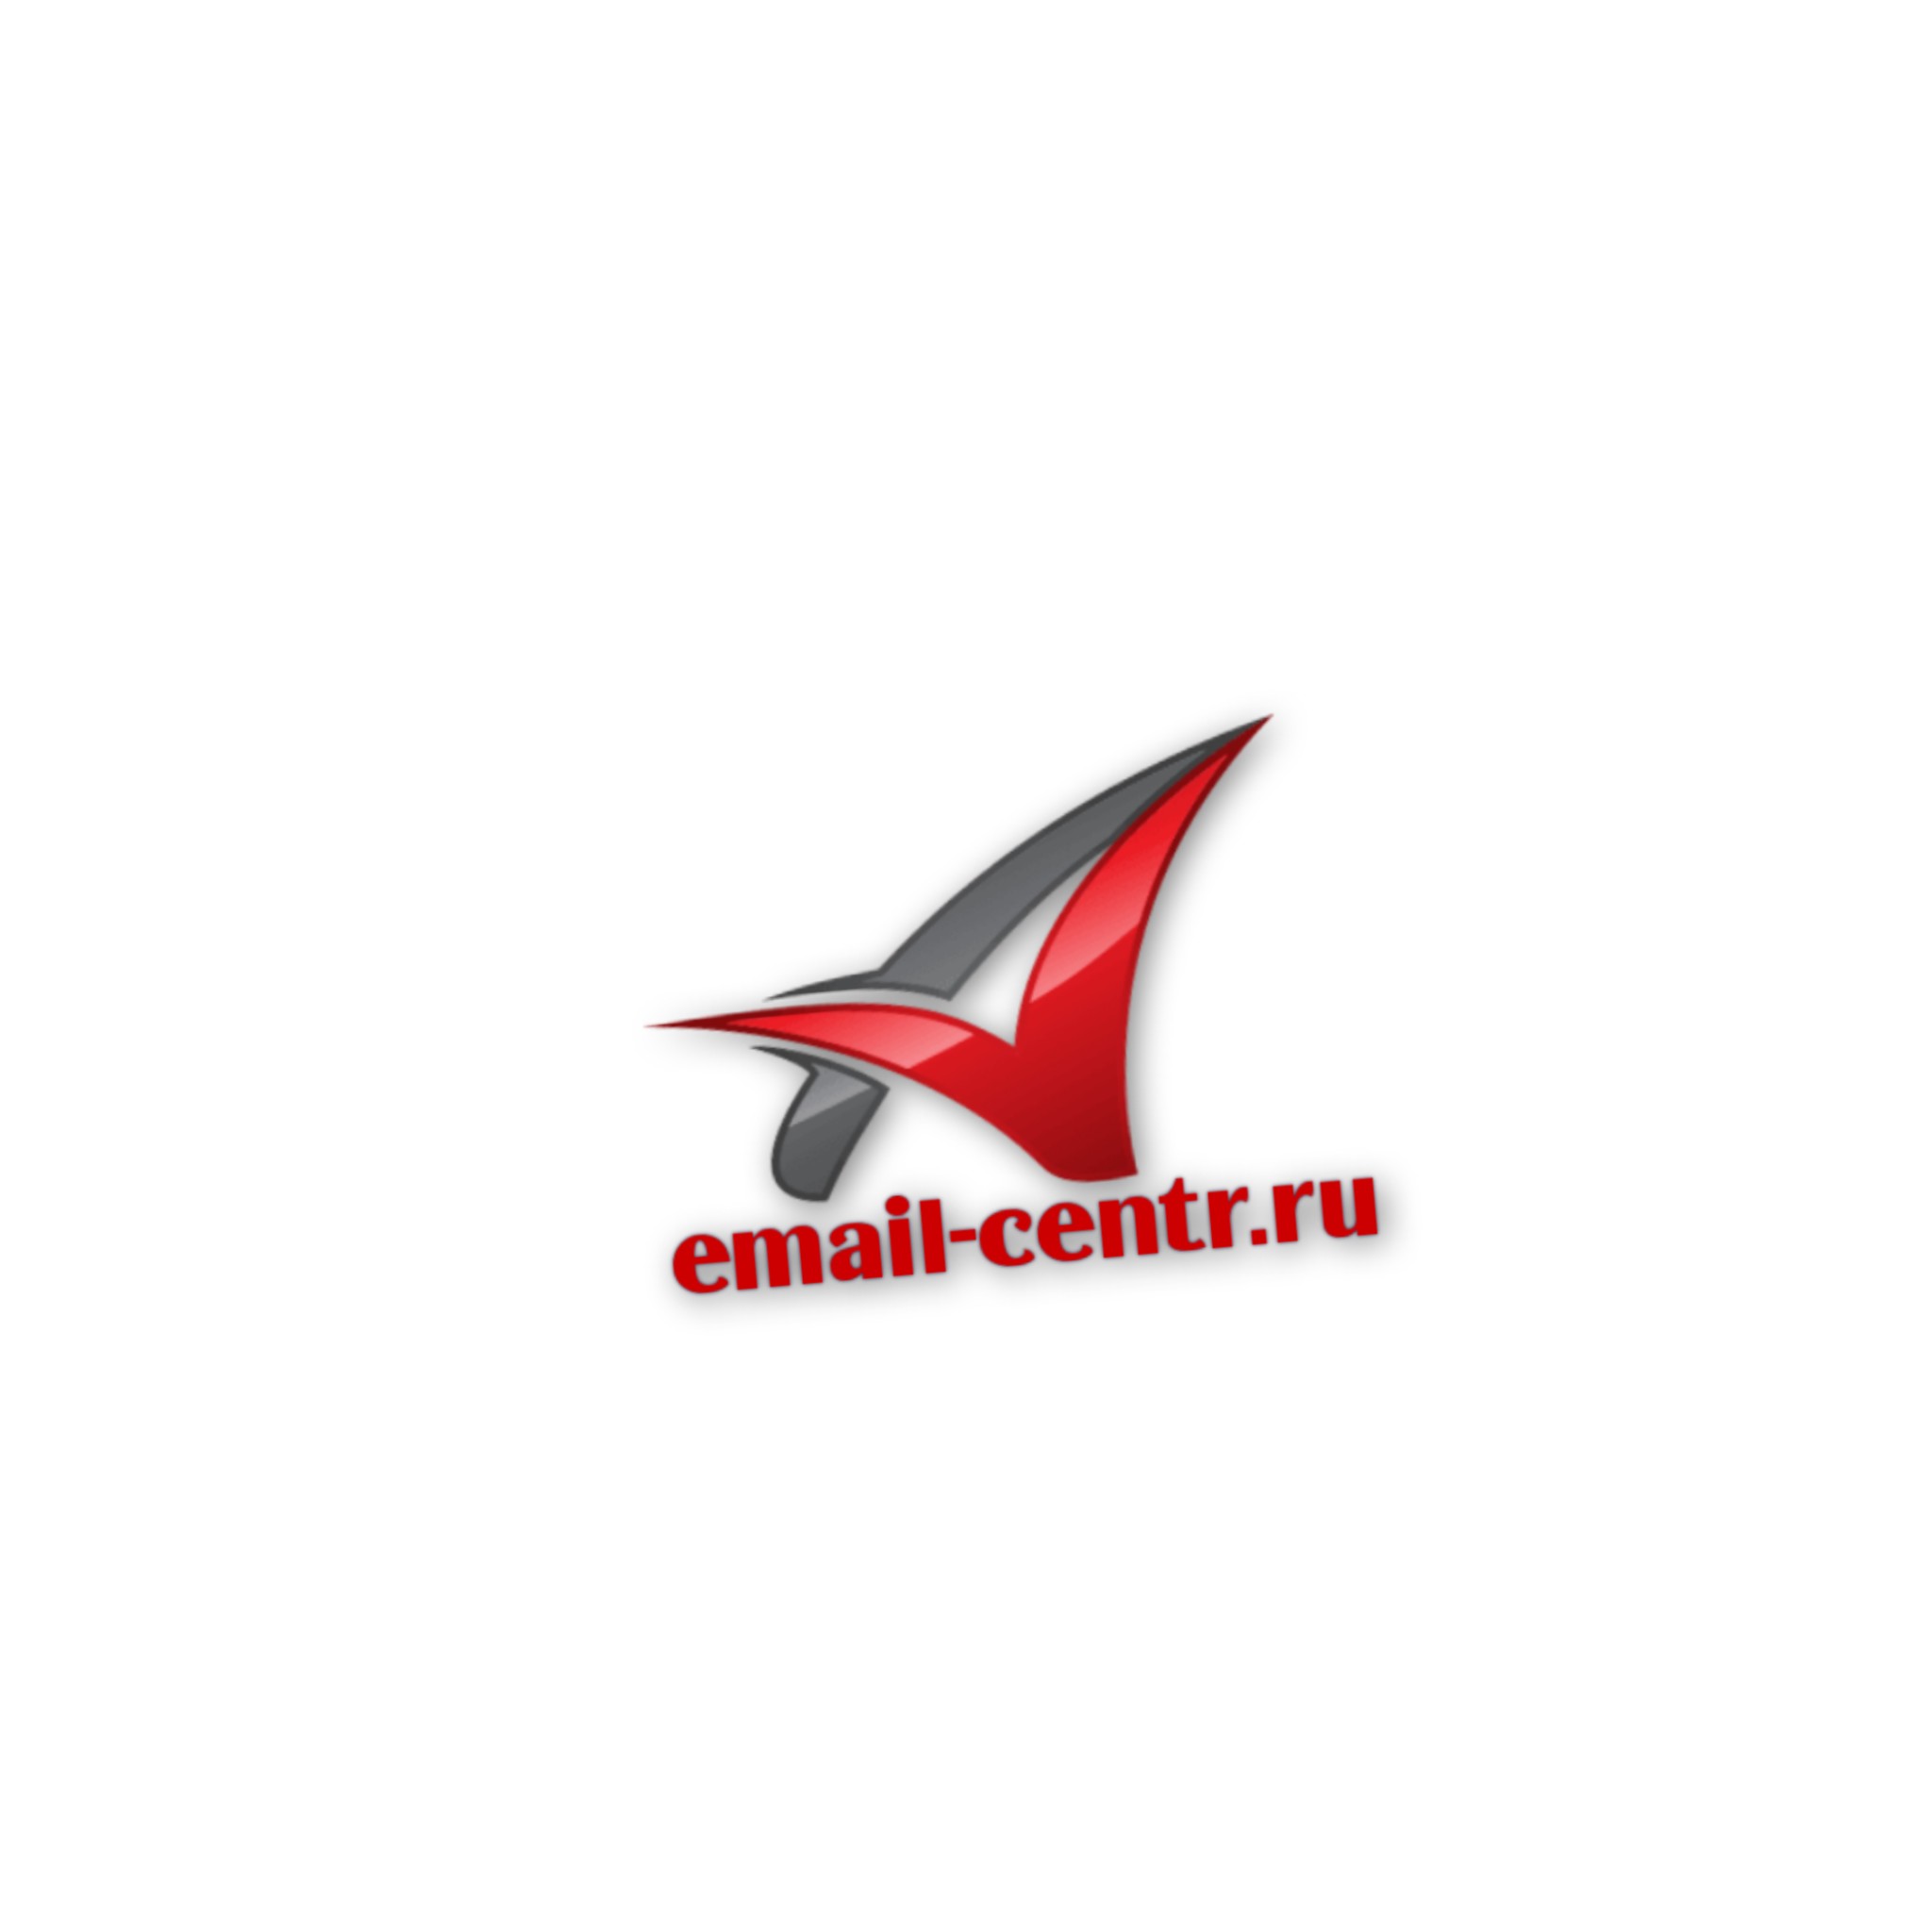 Email-centr Логотип(logo)